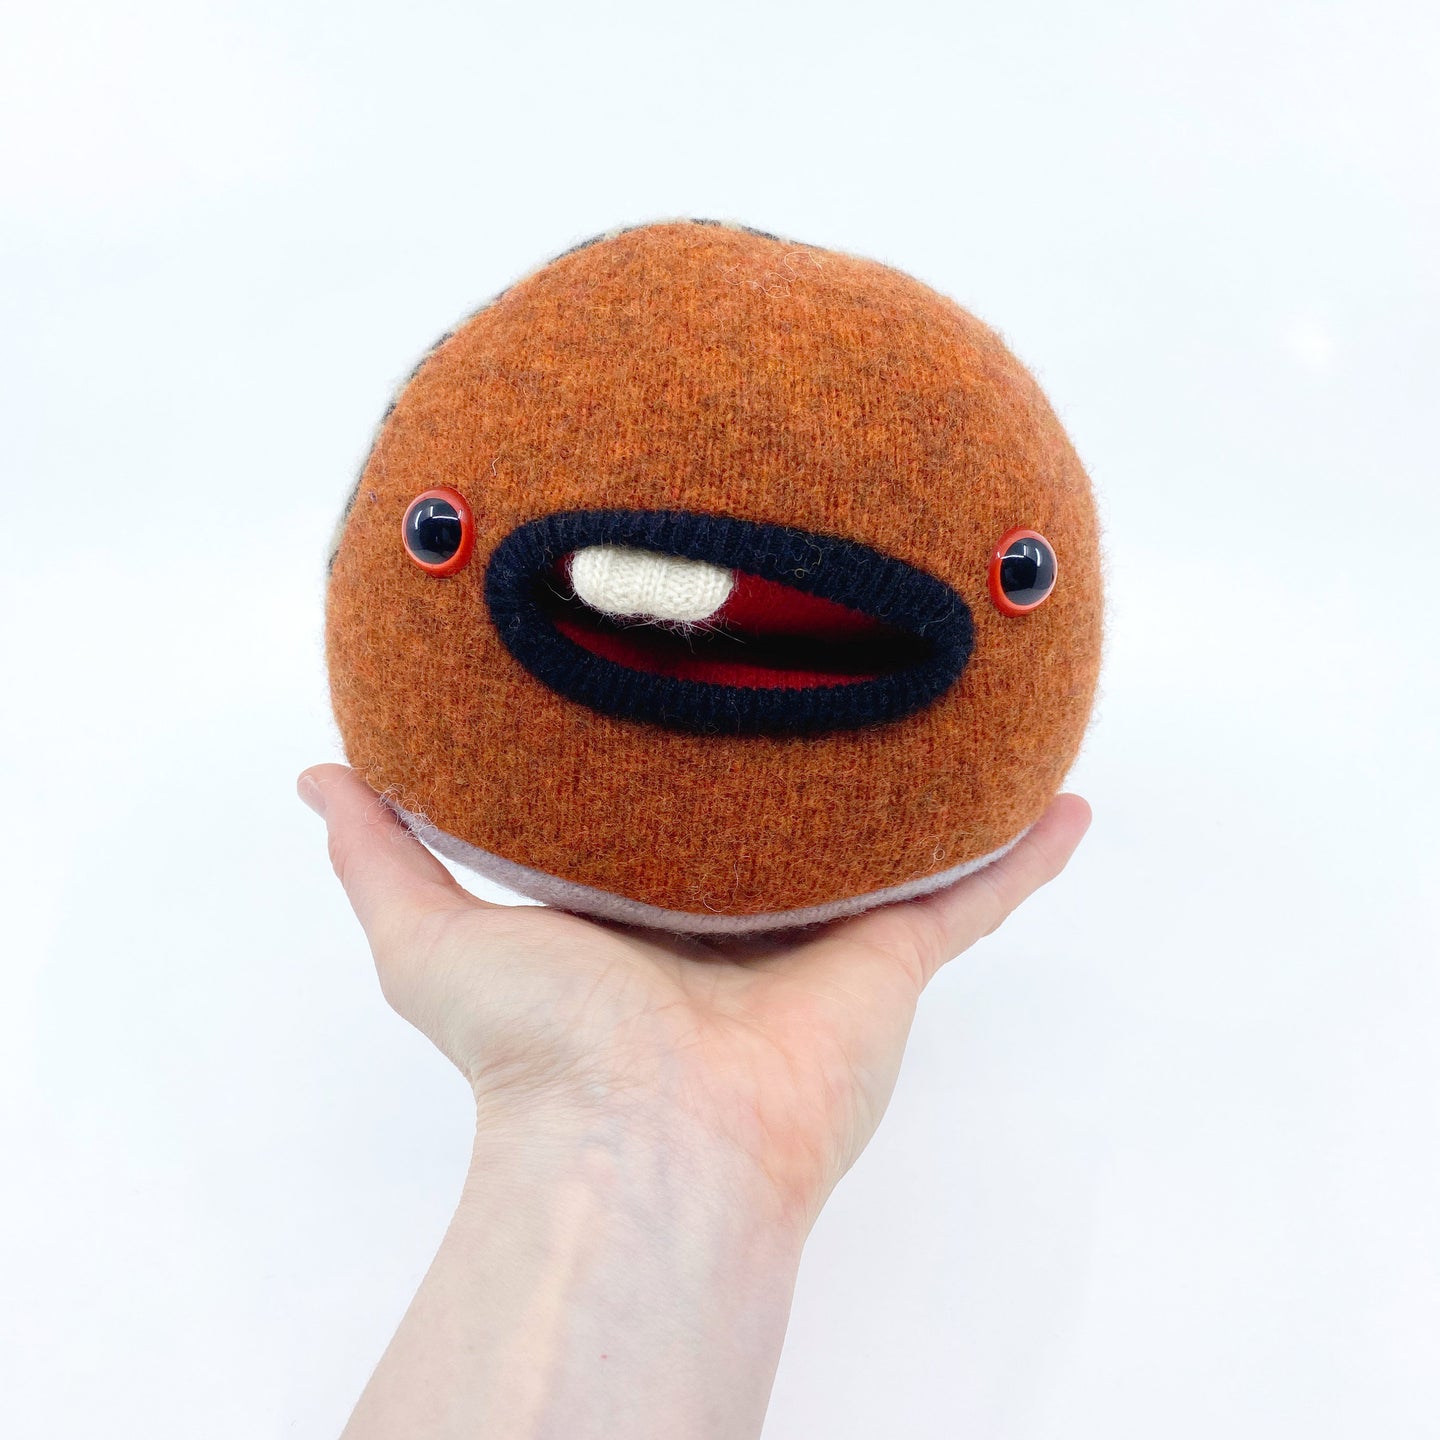 small orange stuffed monster plush toy